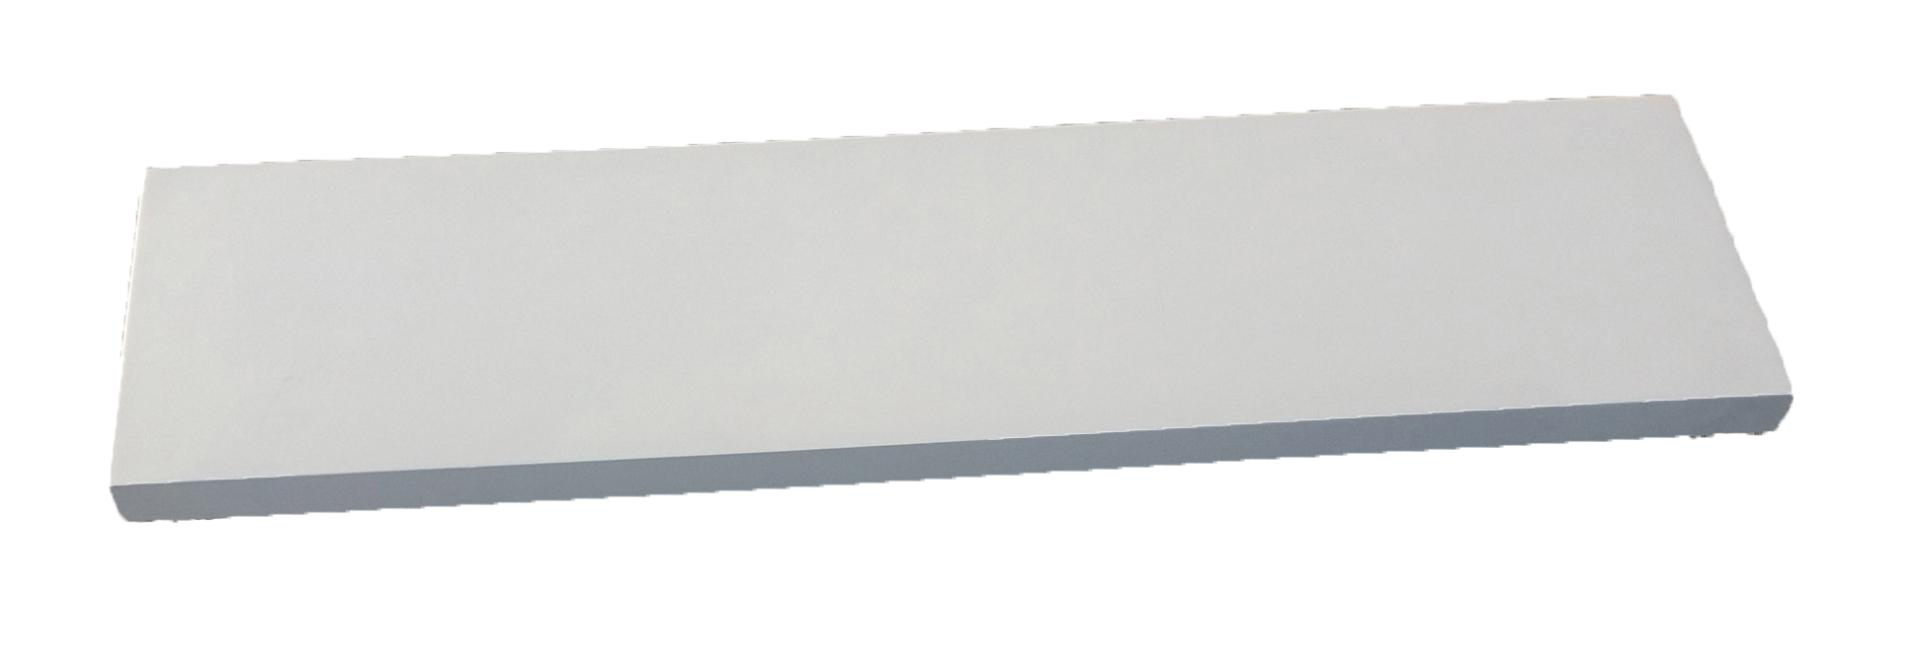 couvertine-plate-100x30x3-5cm-blanc-edycem-0